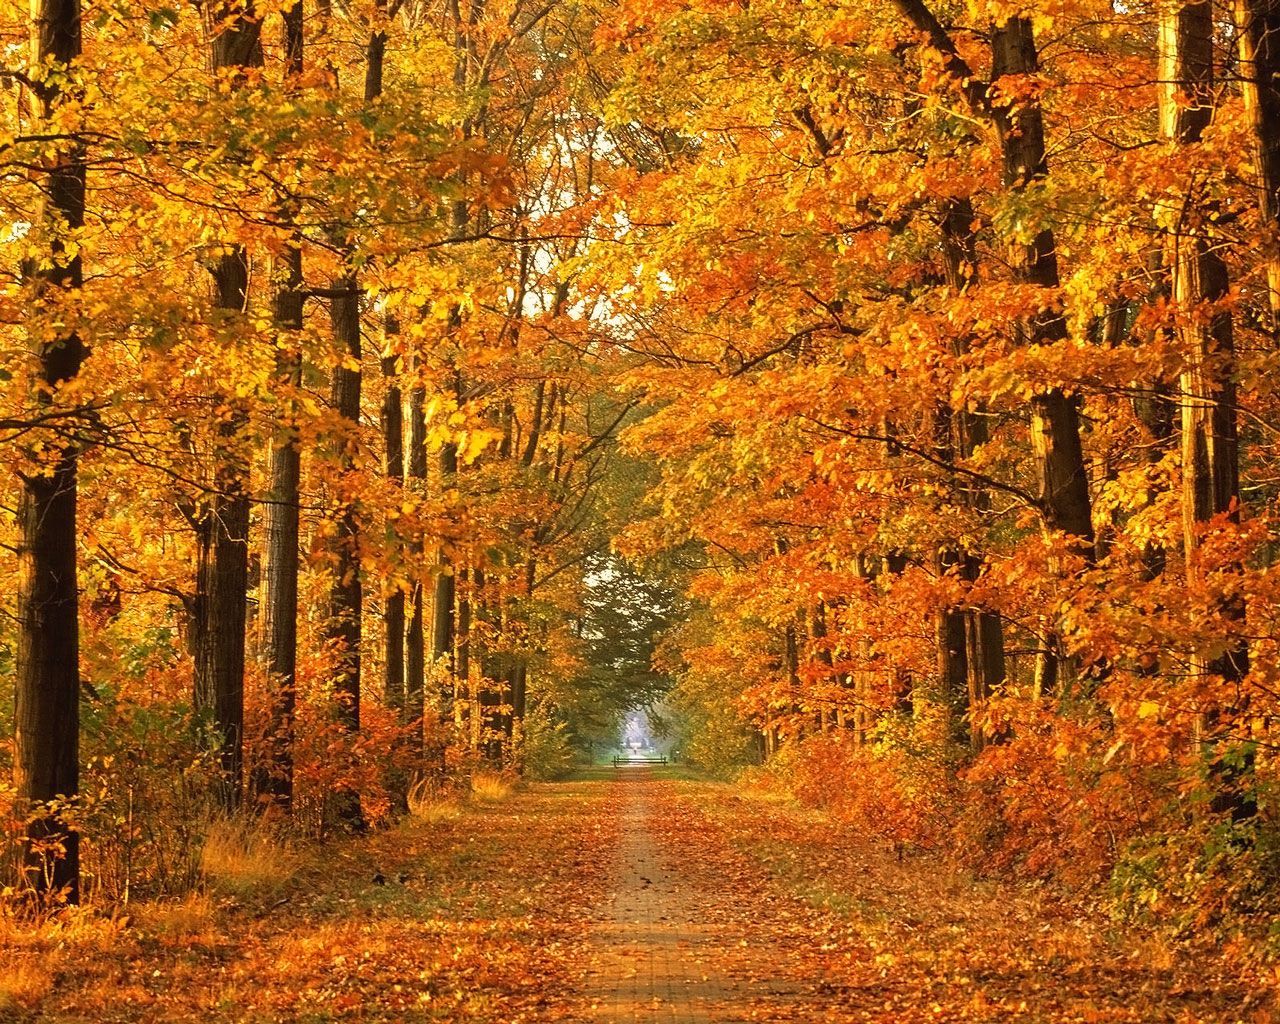 Free Autumn Wallpaper For Desktop. Fall picture, Fall wallpaper, Autumn trees